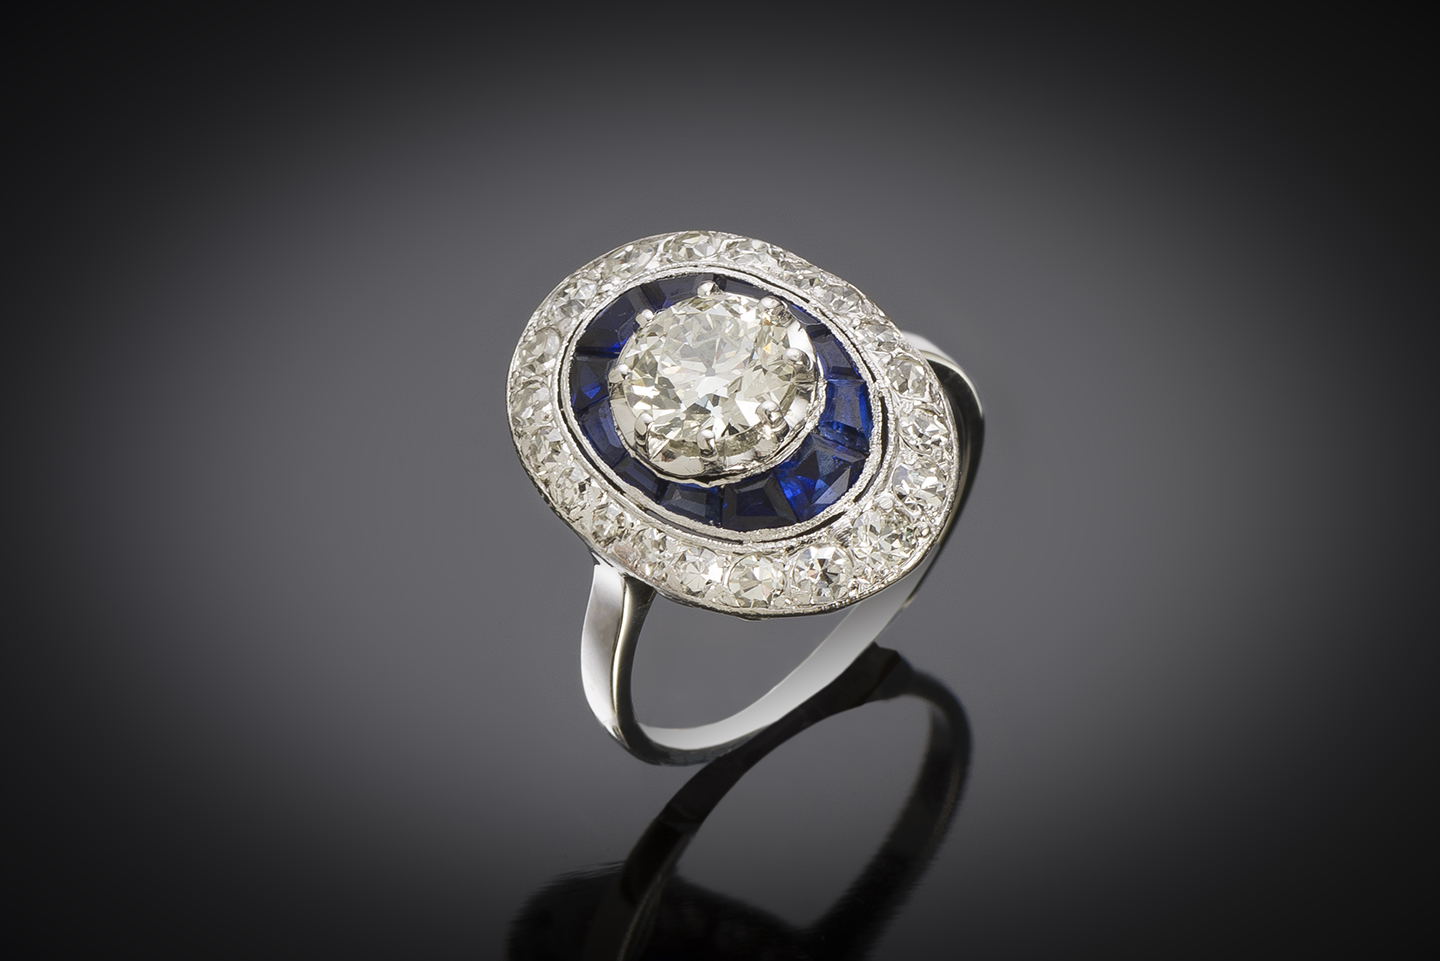 French Art Deco diamond ring (2 carats)-1